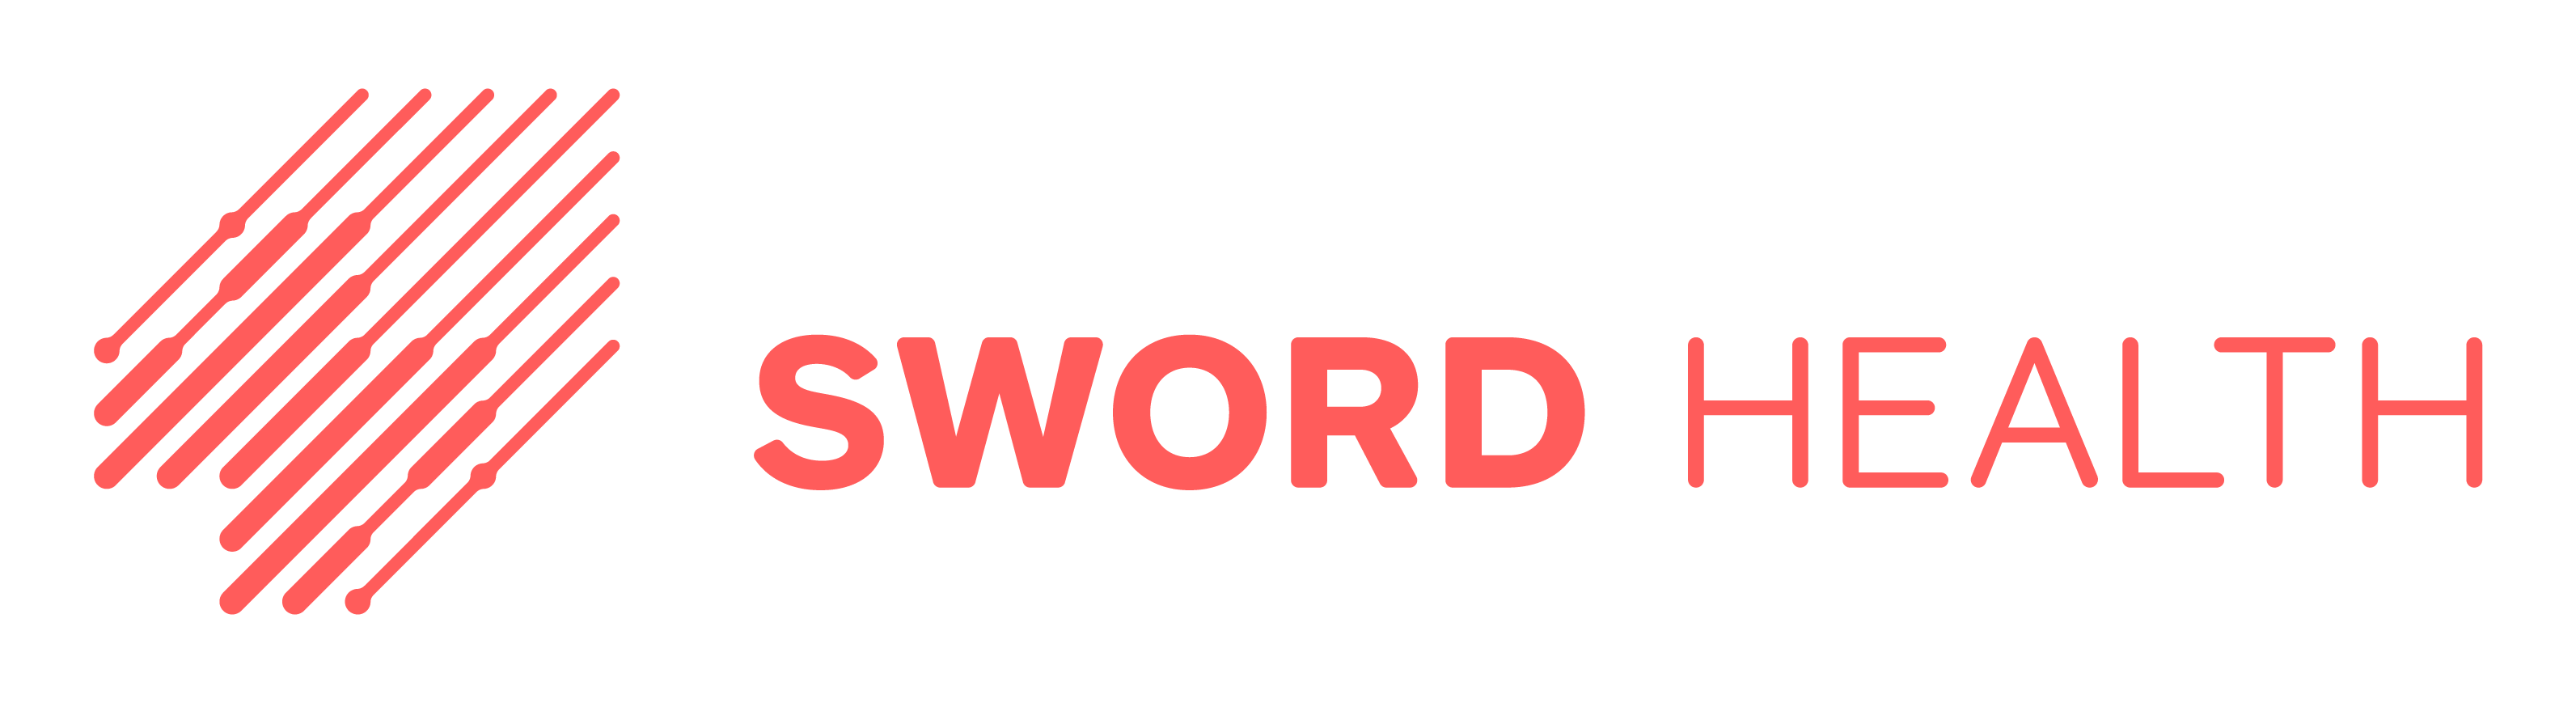 sword health logo